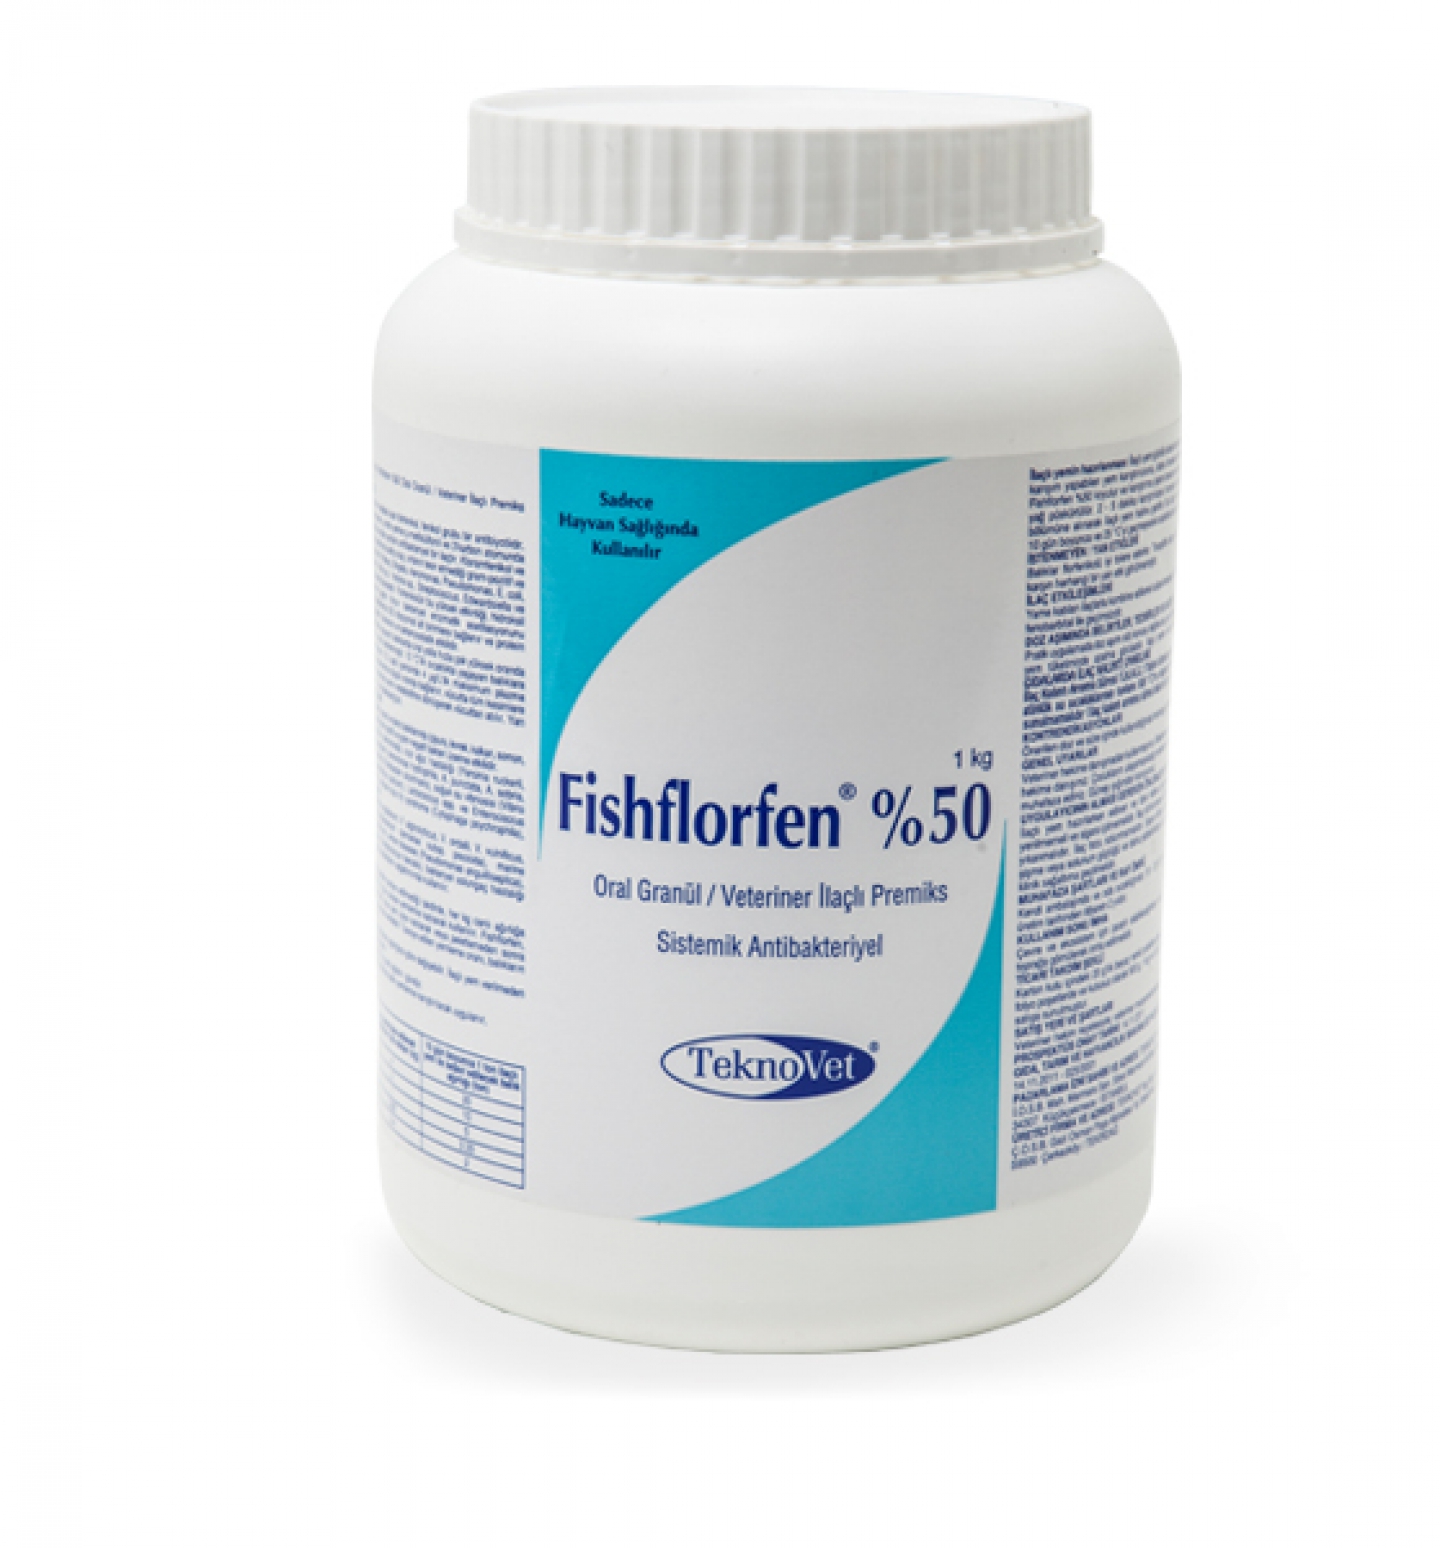 Fishflorfen %50